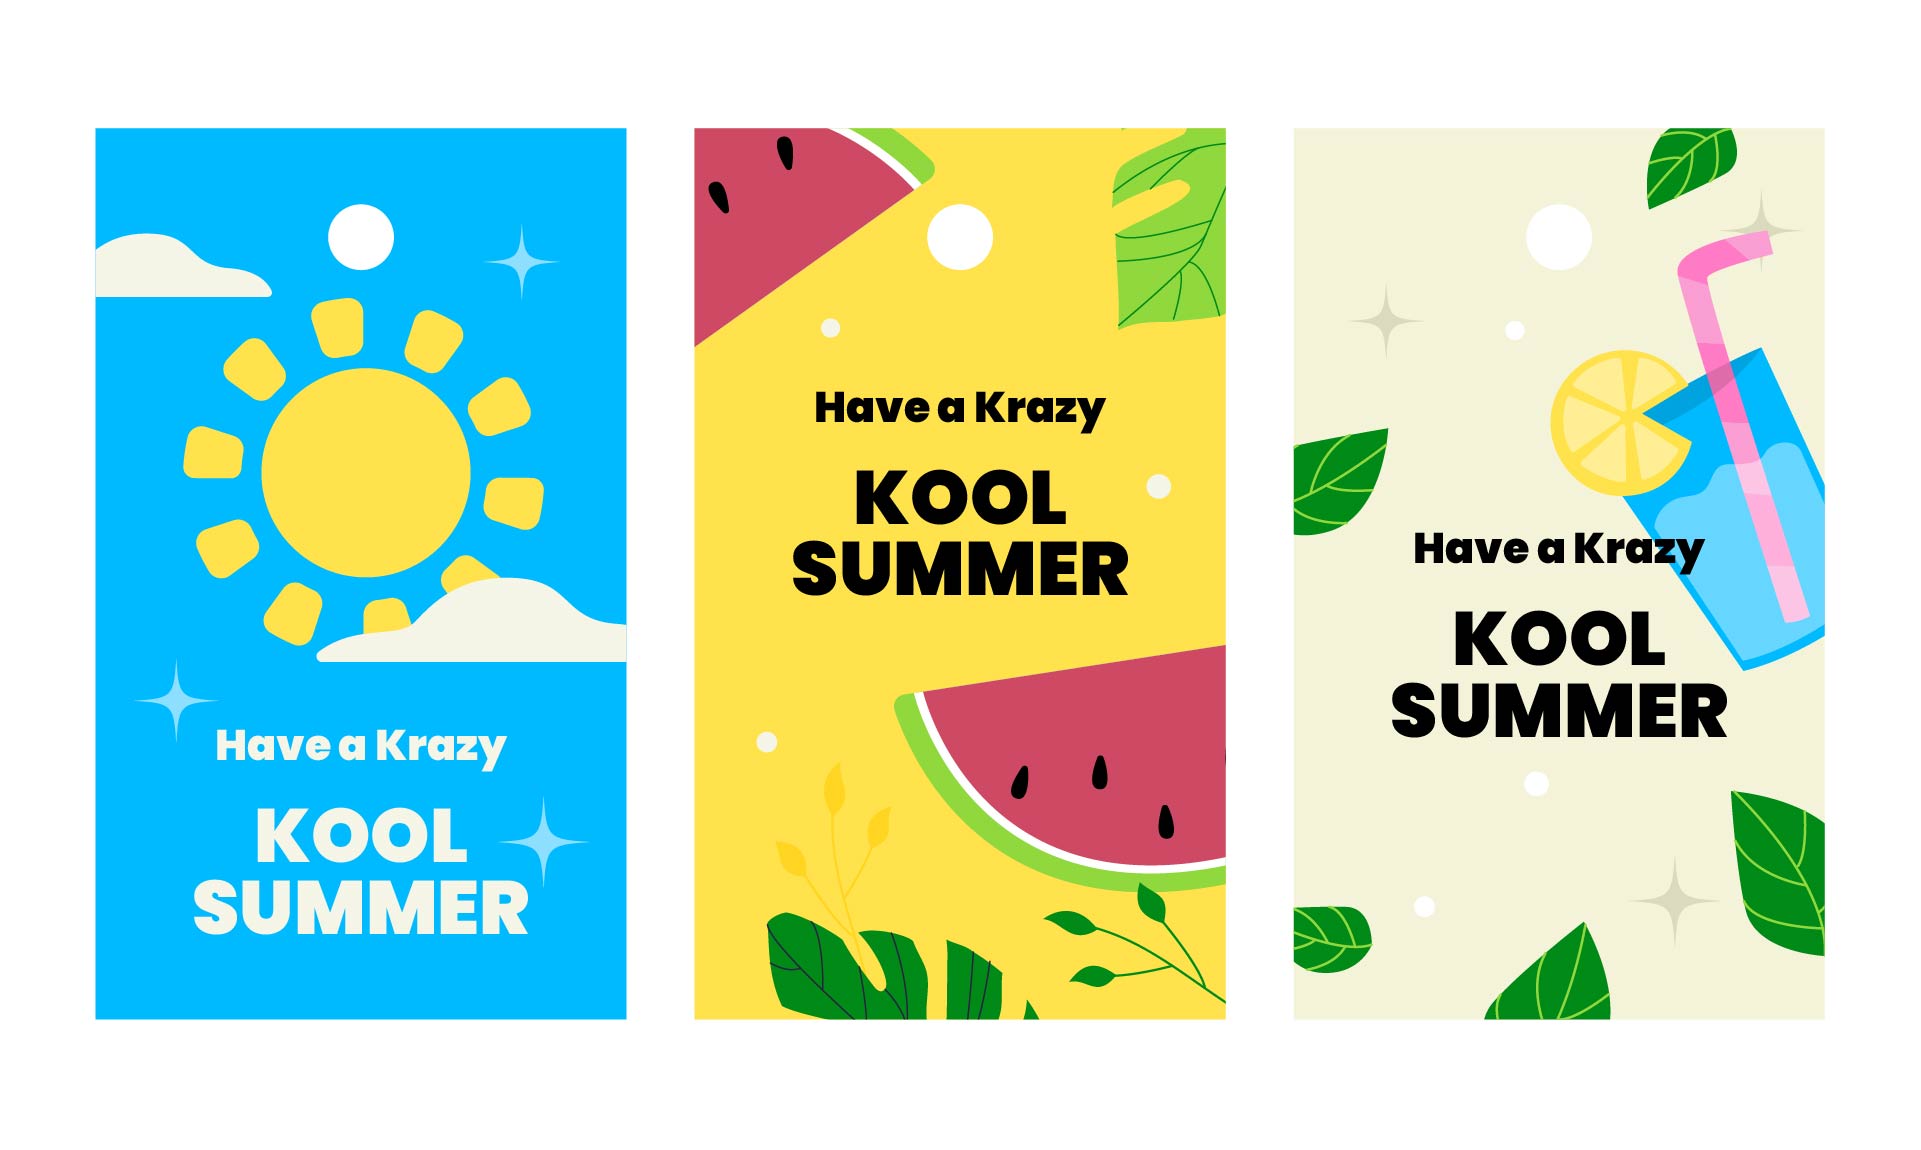 Have a Kool Summer Tag Printable Free